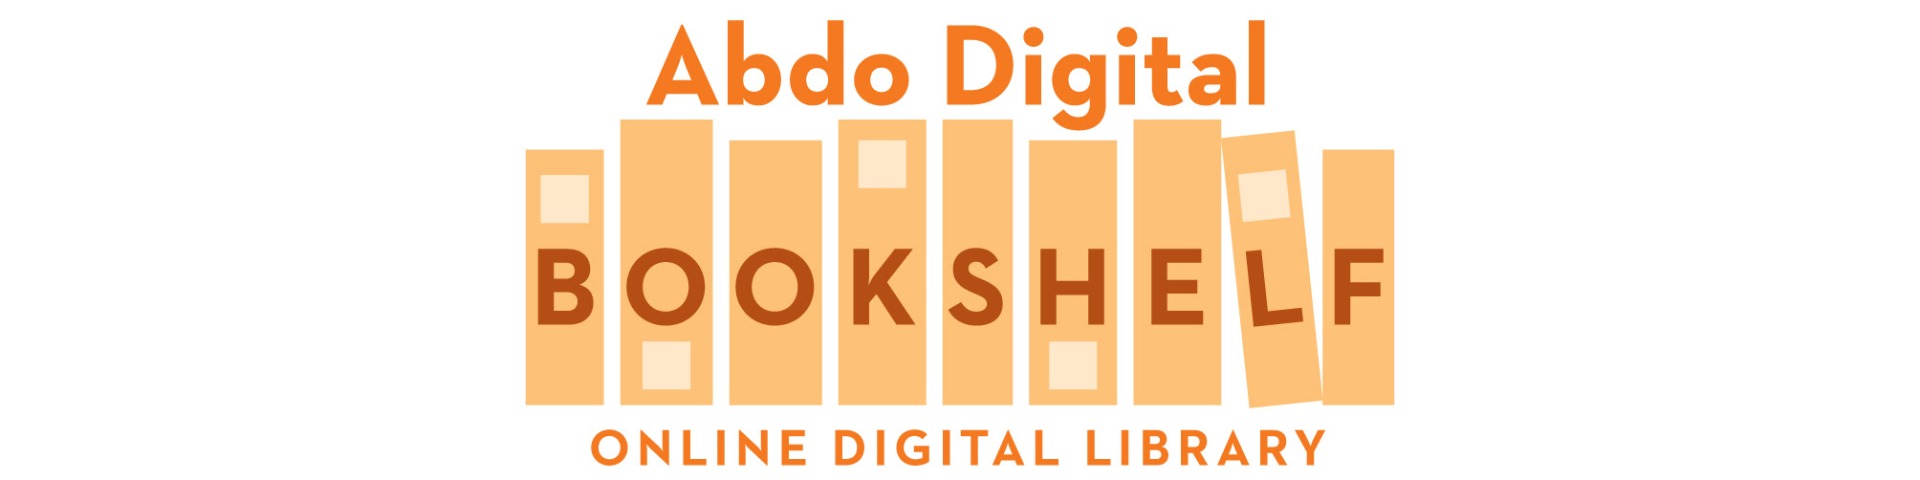 Abdo Digital Bookshelf Online Digital Library